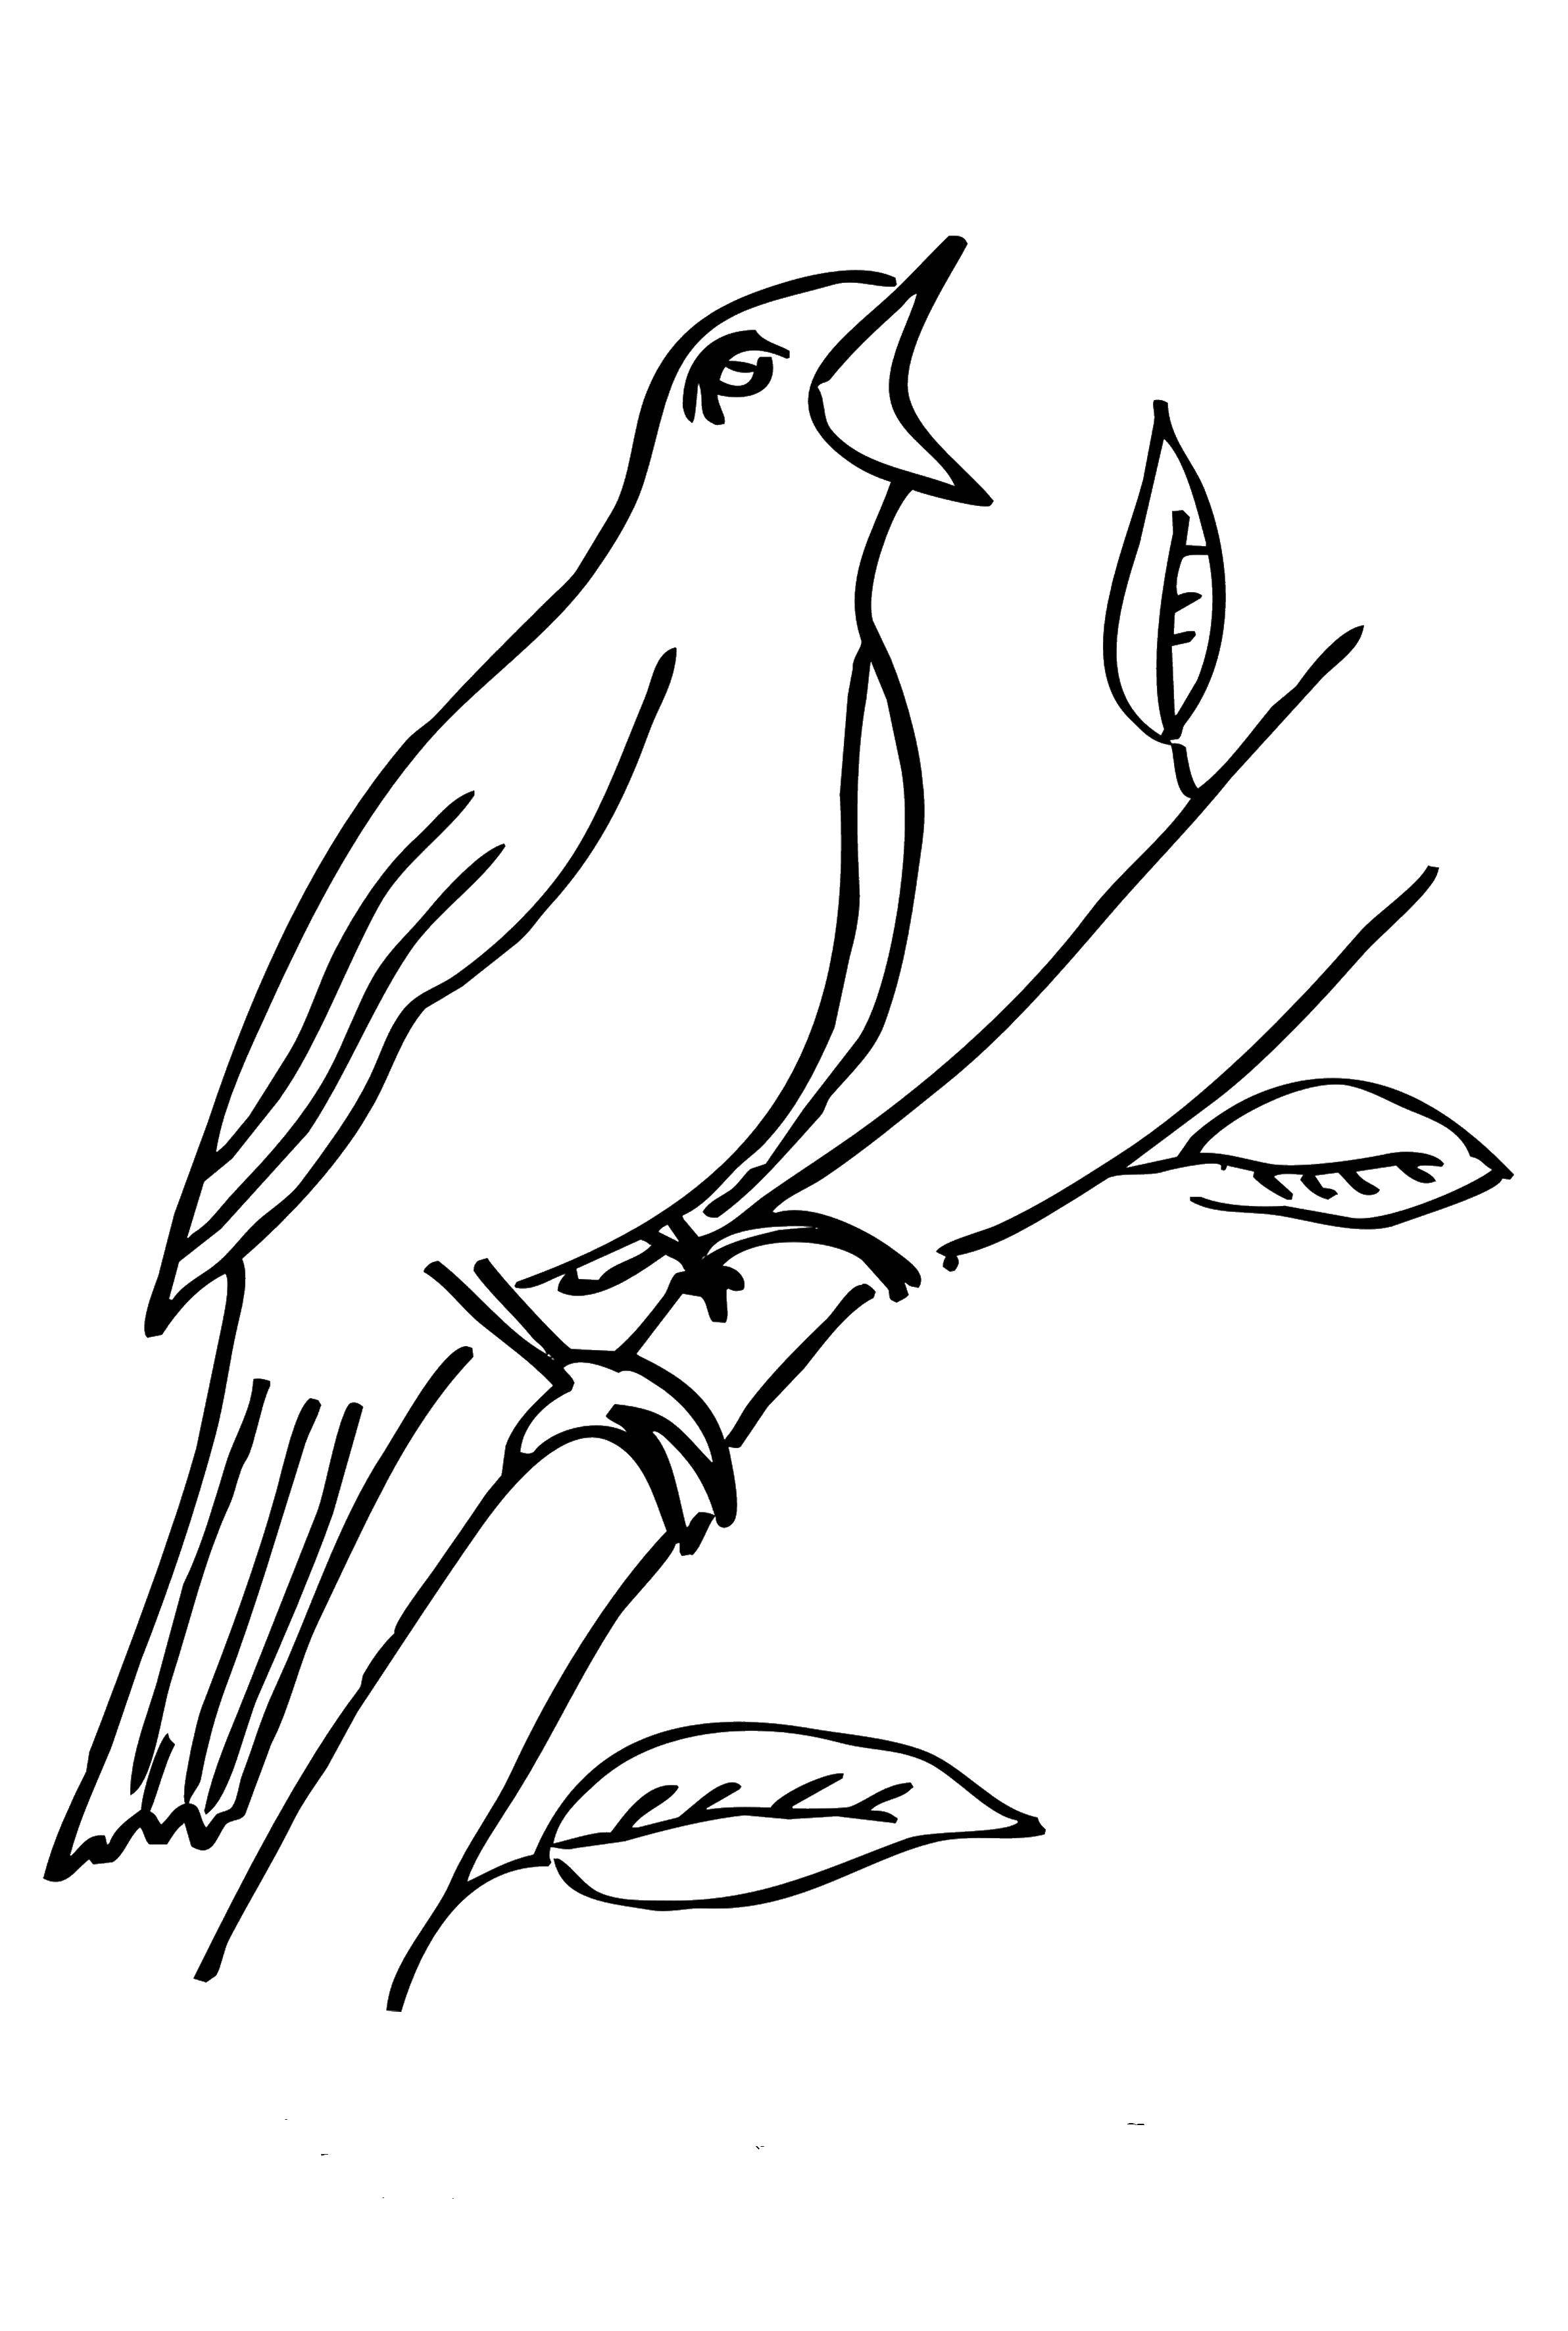 Coloring Bird on a branch. Category birds. Tags:  bird.